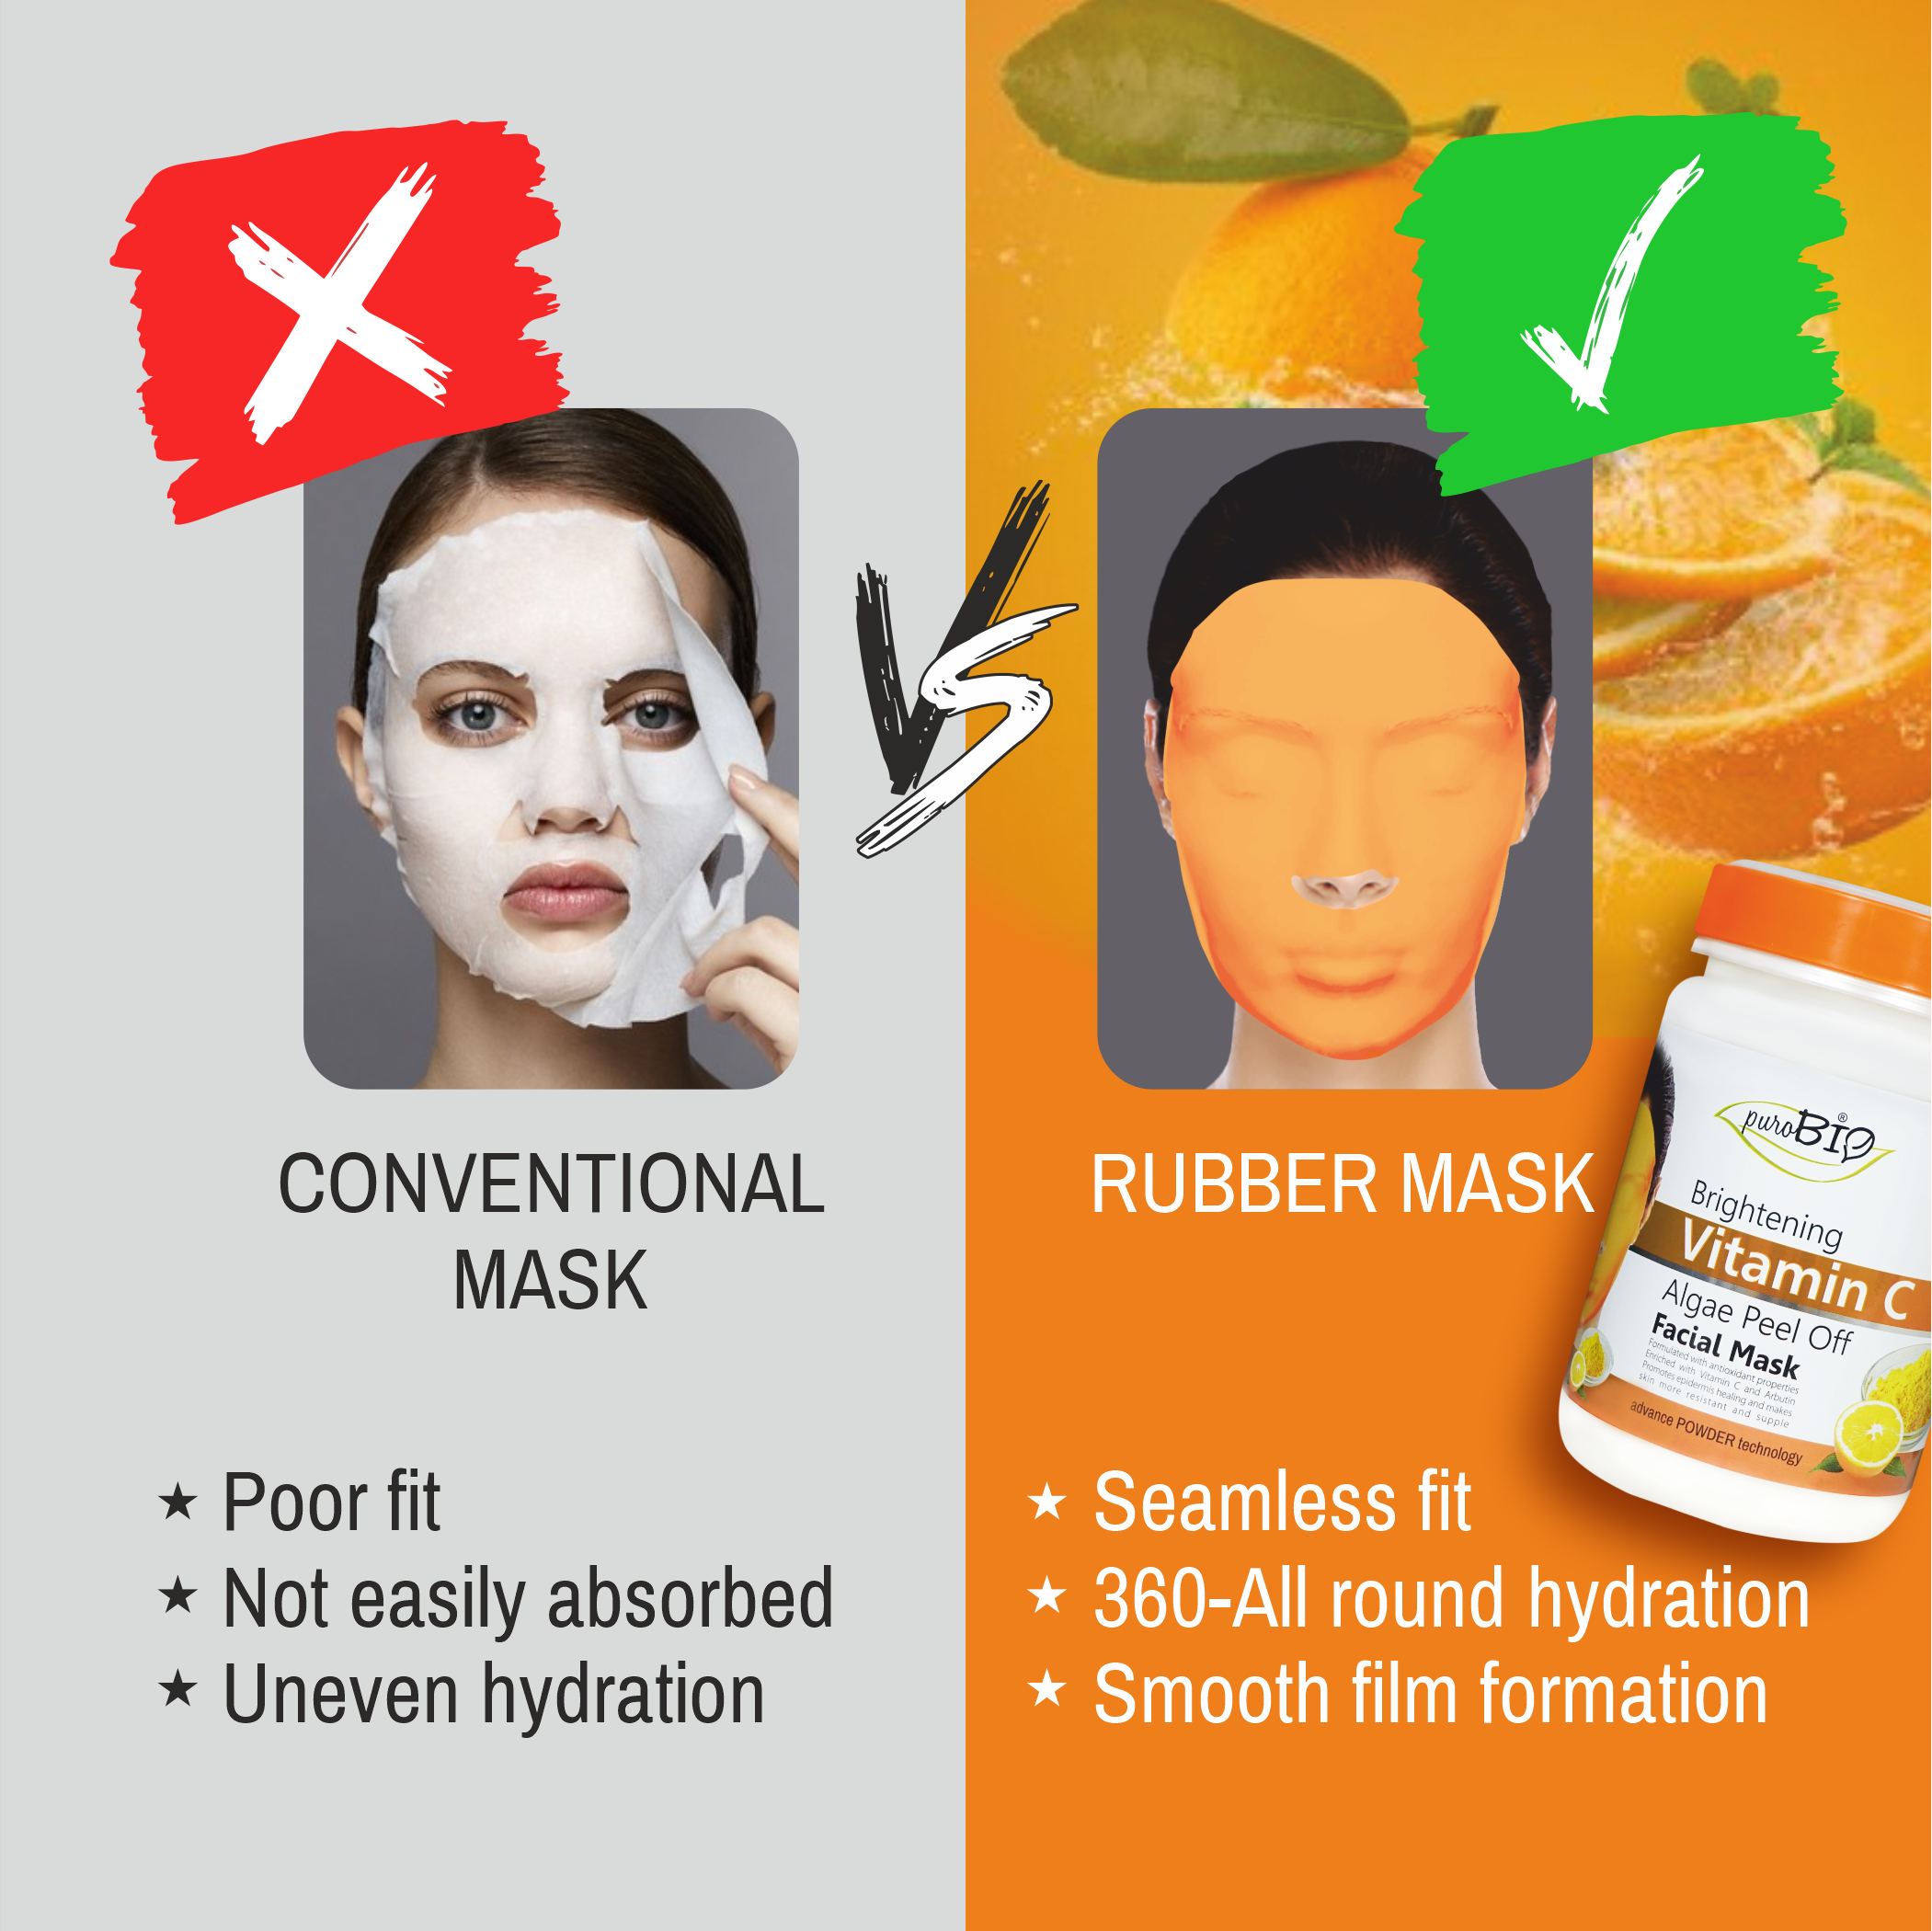 Vitamin C Algae Peel Off Powder Facial Mask